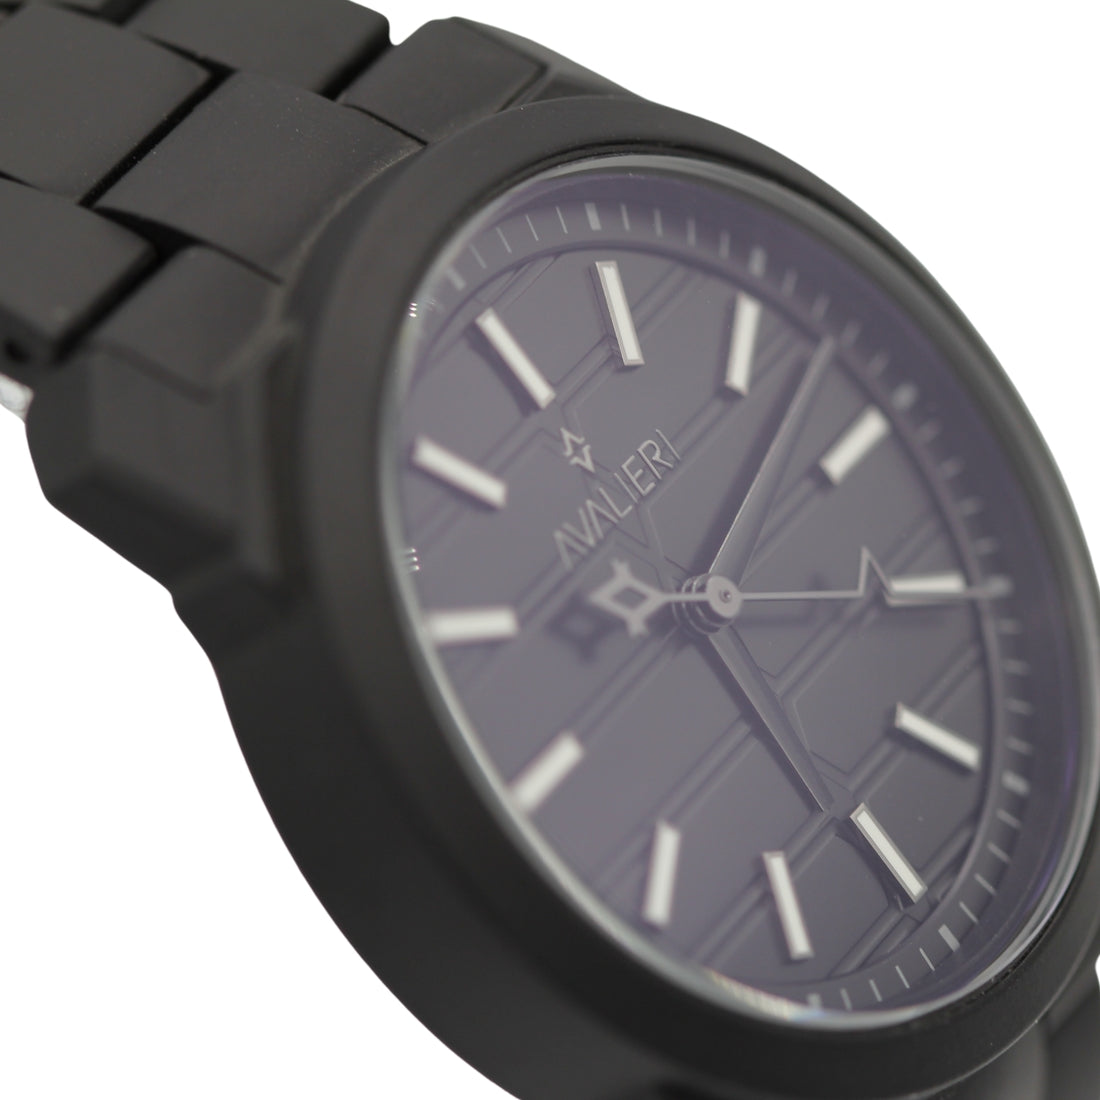 Avalieri Men's Quartz Watch with Black Dial - AV-2577B